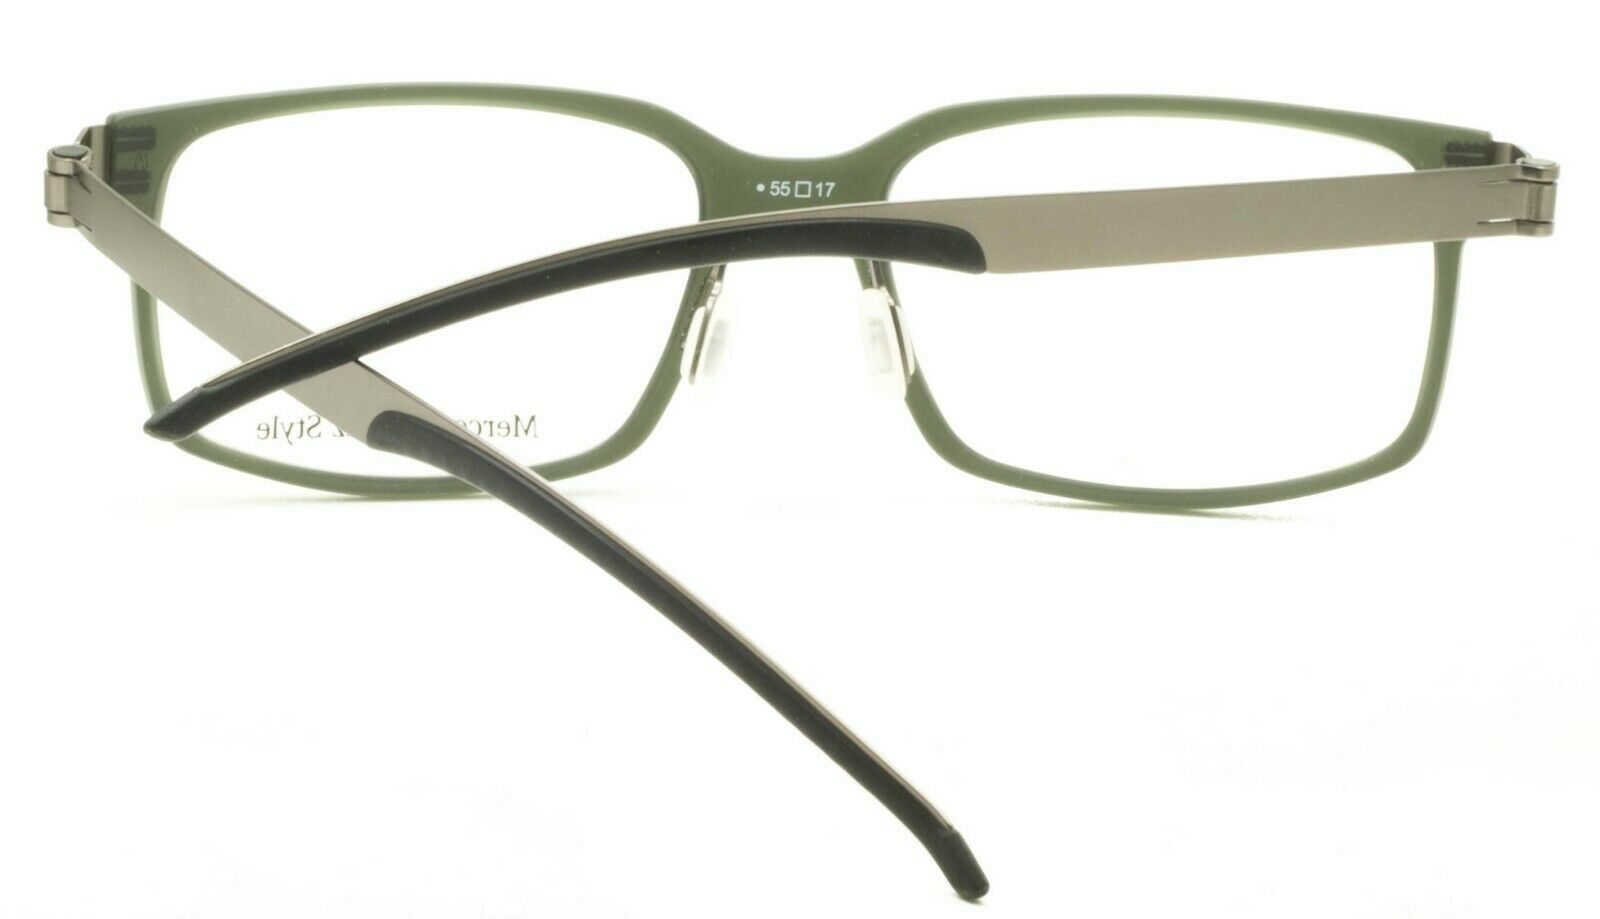 MERCEDES BENZ STYLE M 4015 C 55mm Eyewear FRAMES RX Optical Eyeglasses Glasses